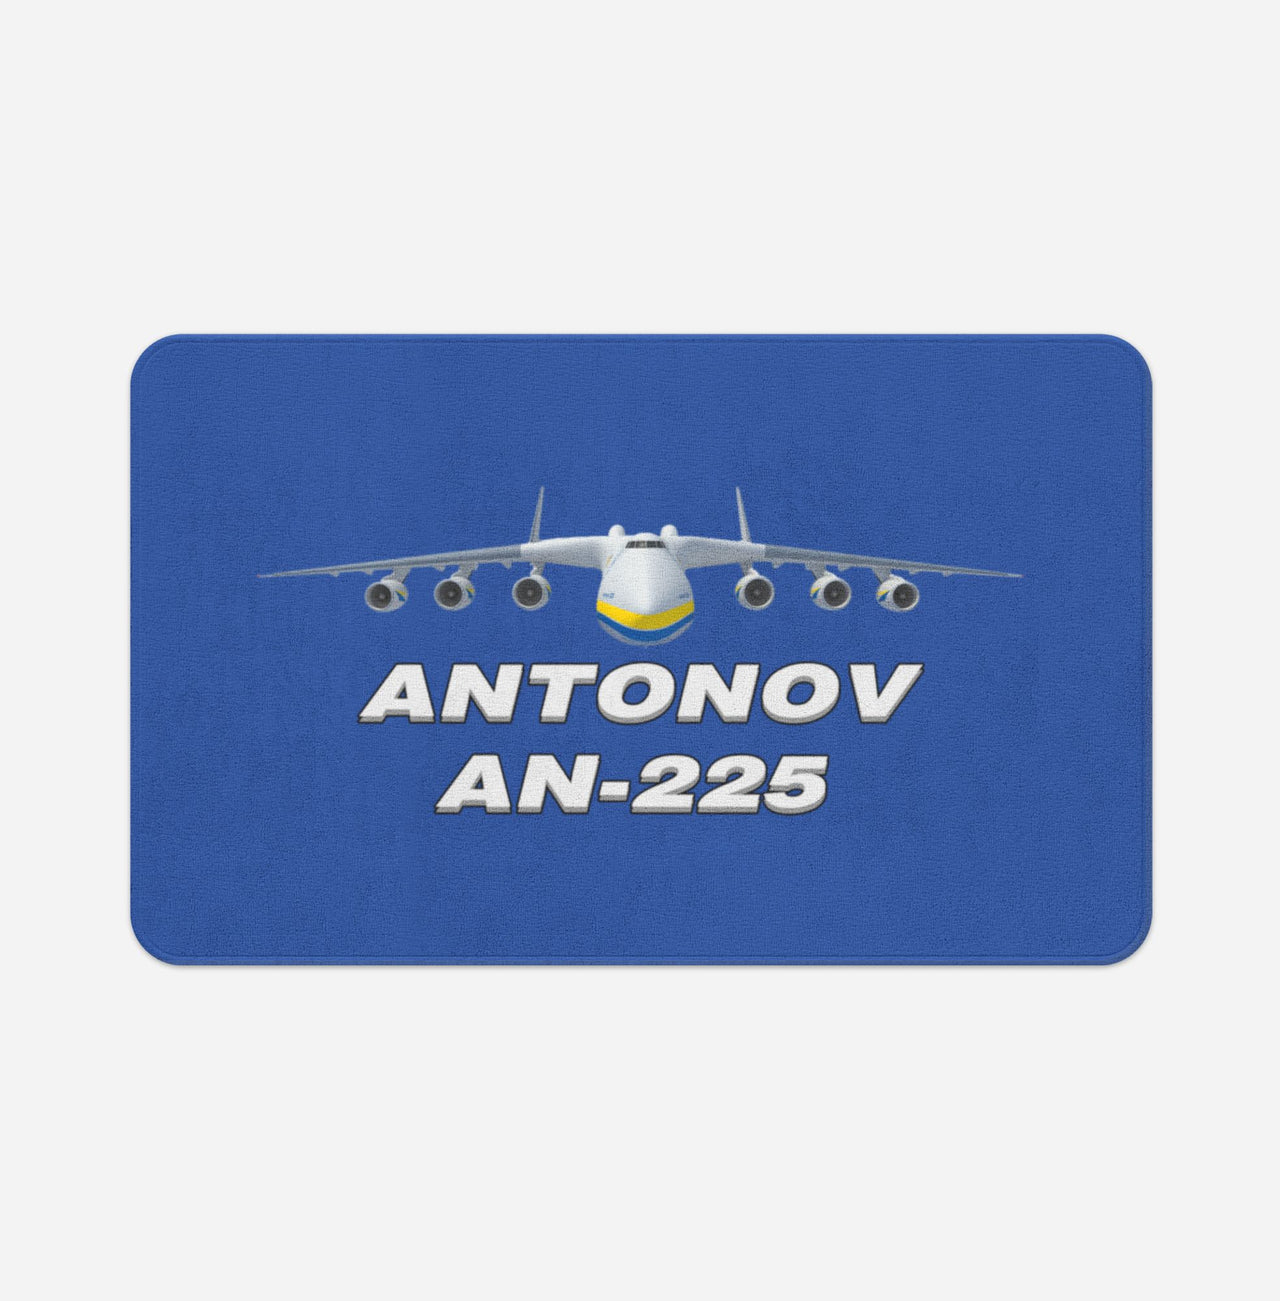 Antonov AN-225 (16) Designed Bath Mats